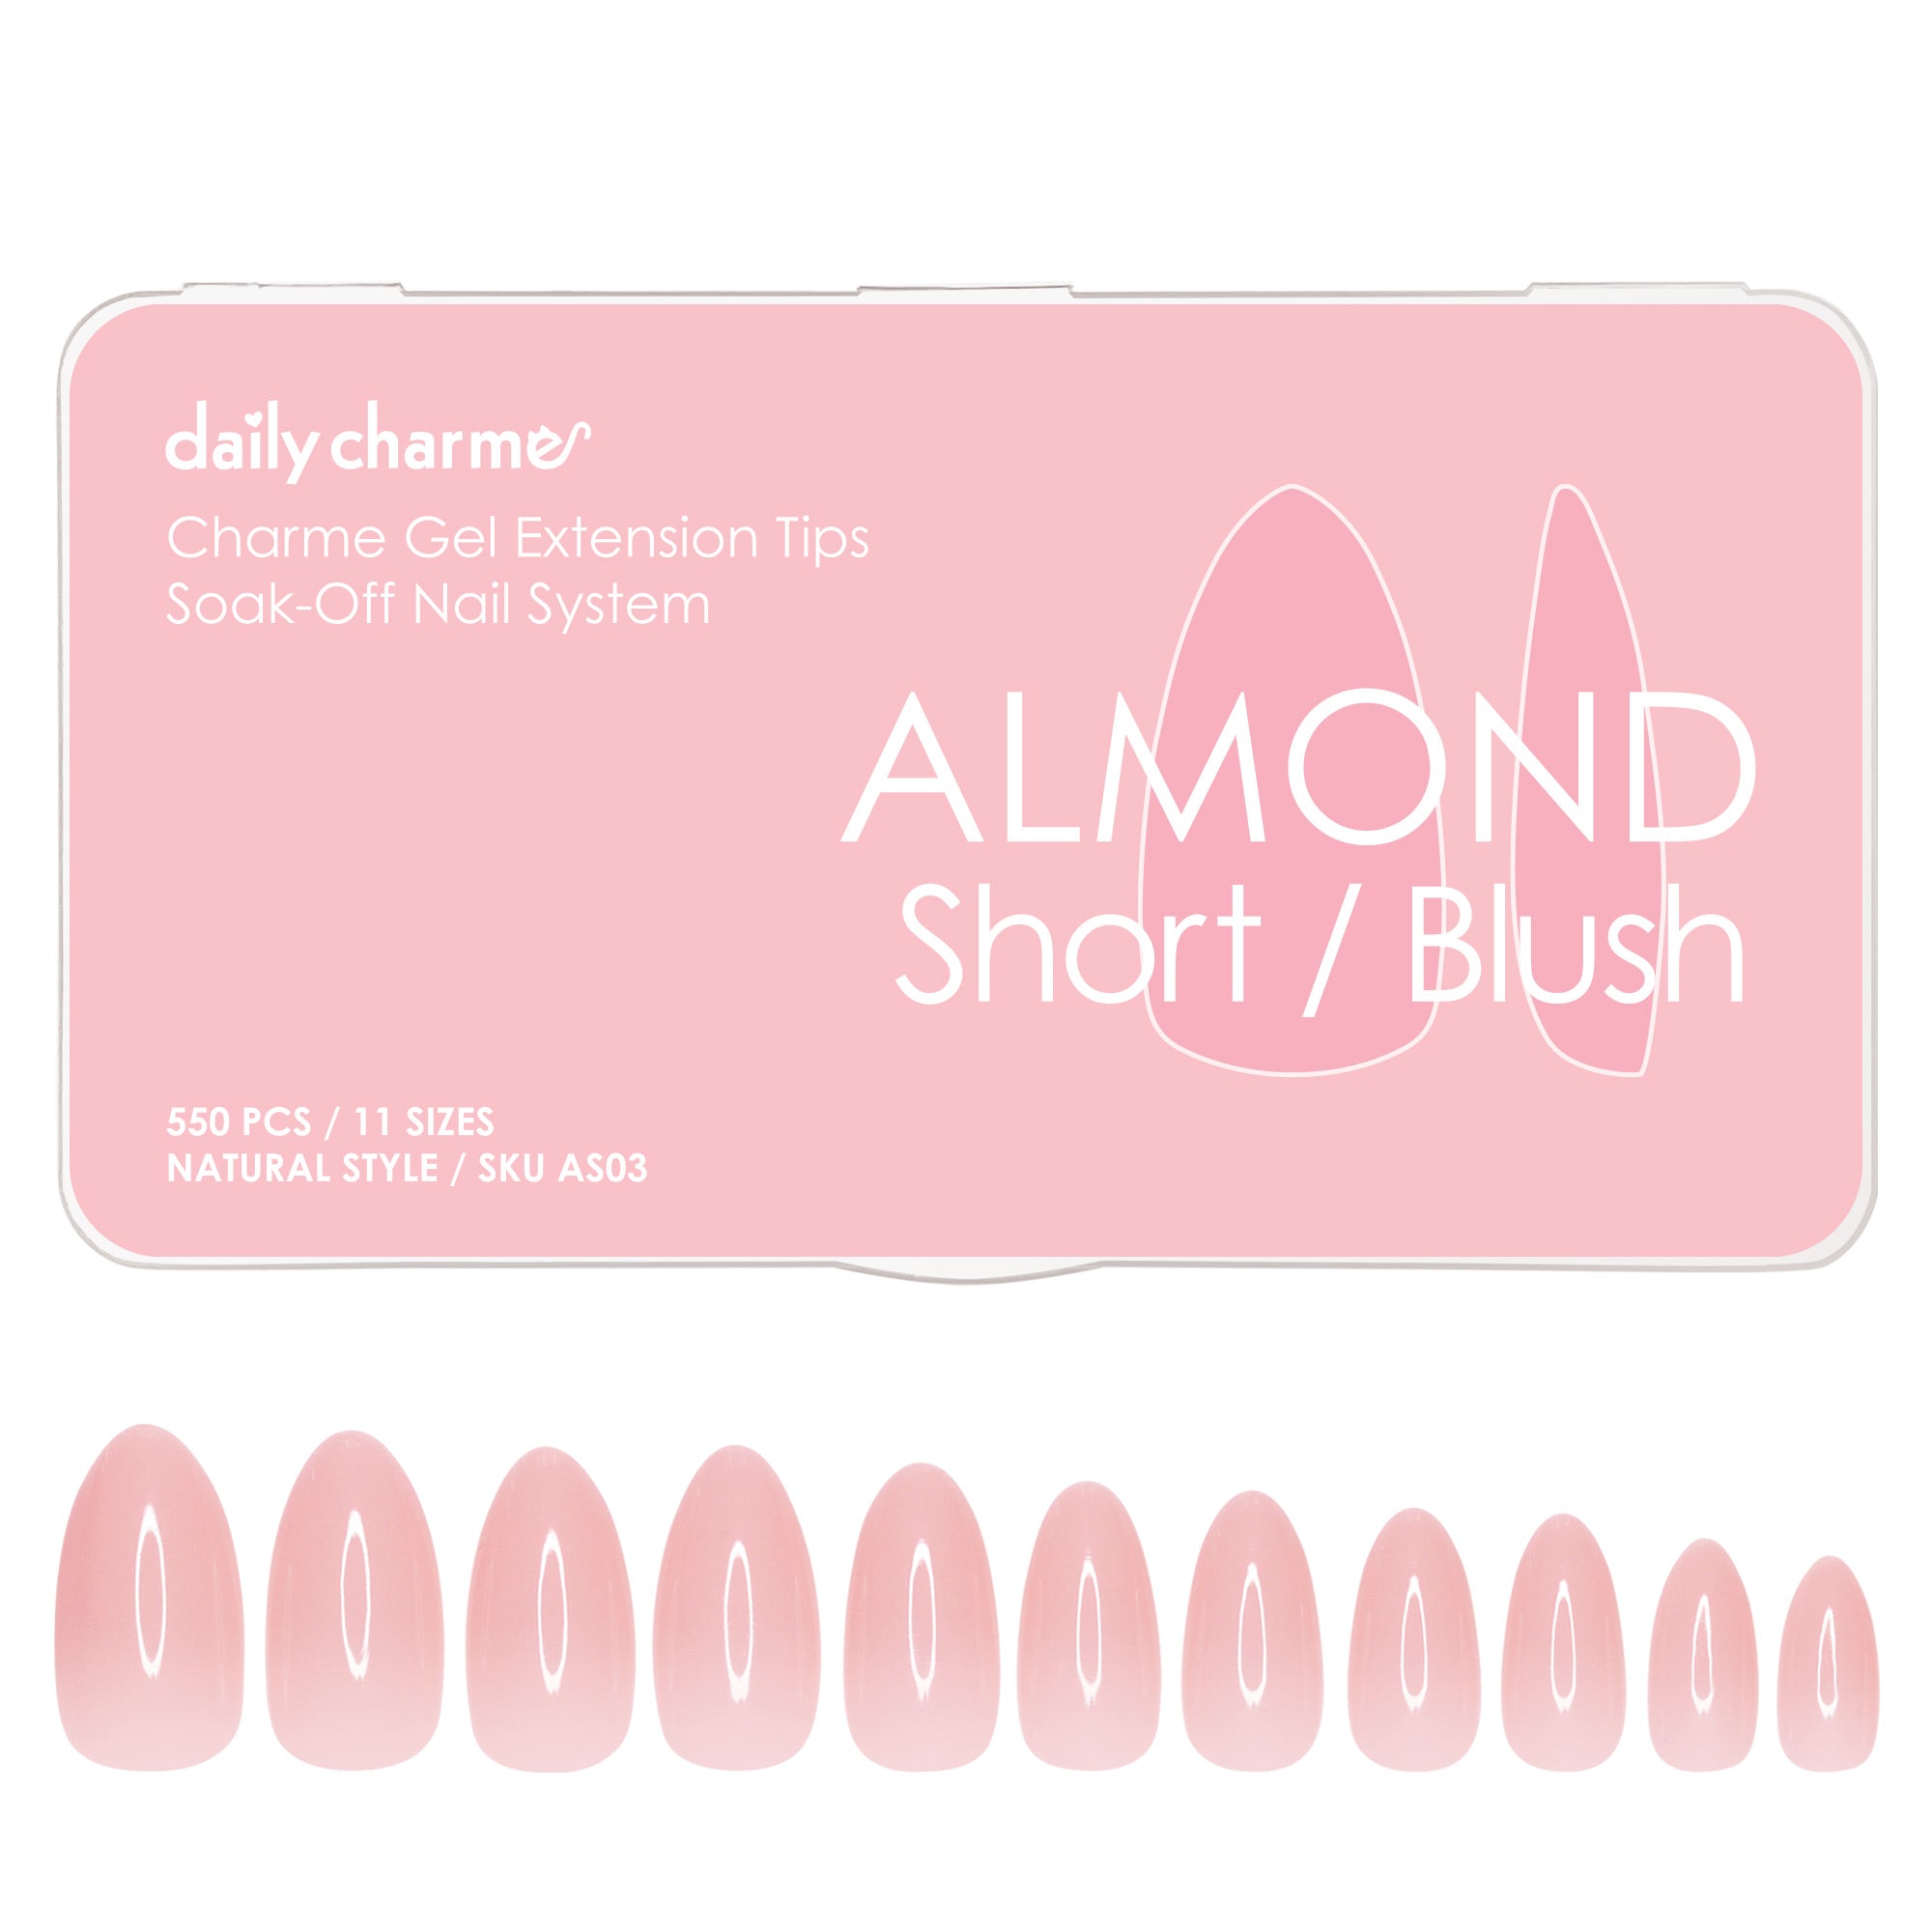 Charme Gel Extension Tips / Almond / Short / Blush